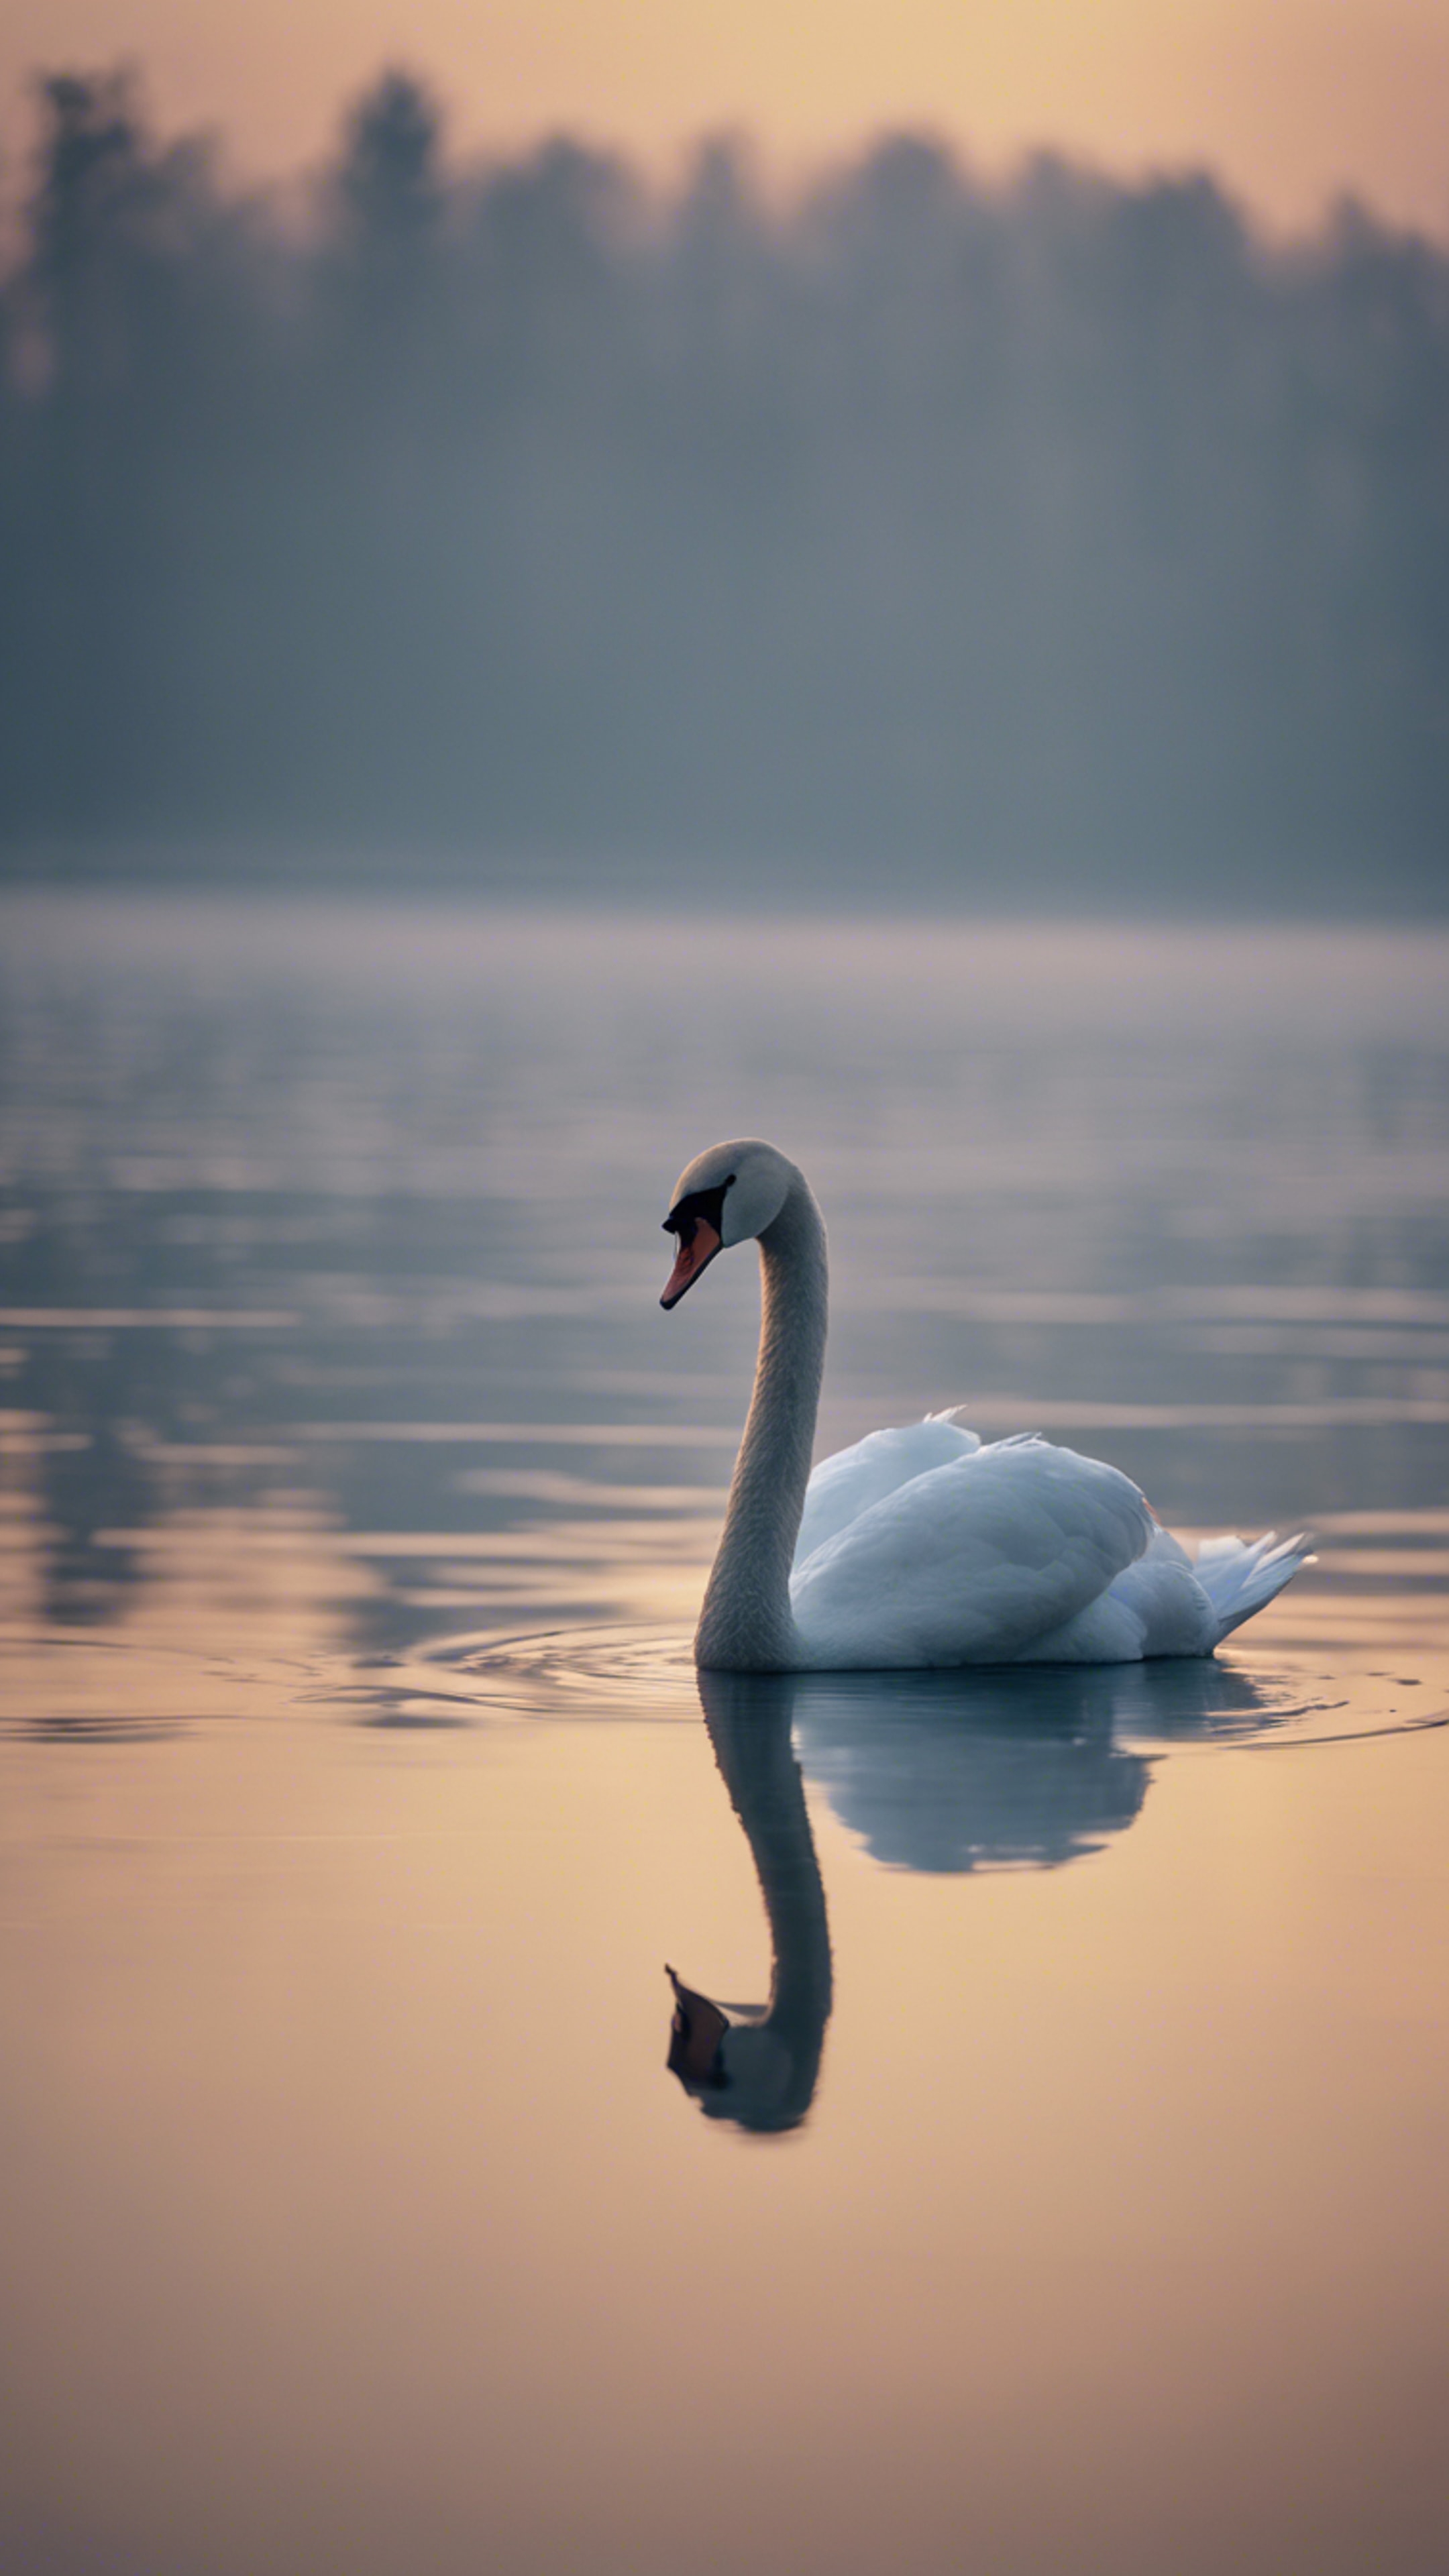 A single love-struck swan swimming alone in a desolate lake under the pallid glow of a gloomy moon. Tapeta[674930fc7c9f467a8426]